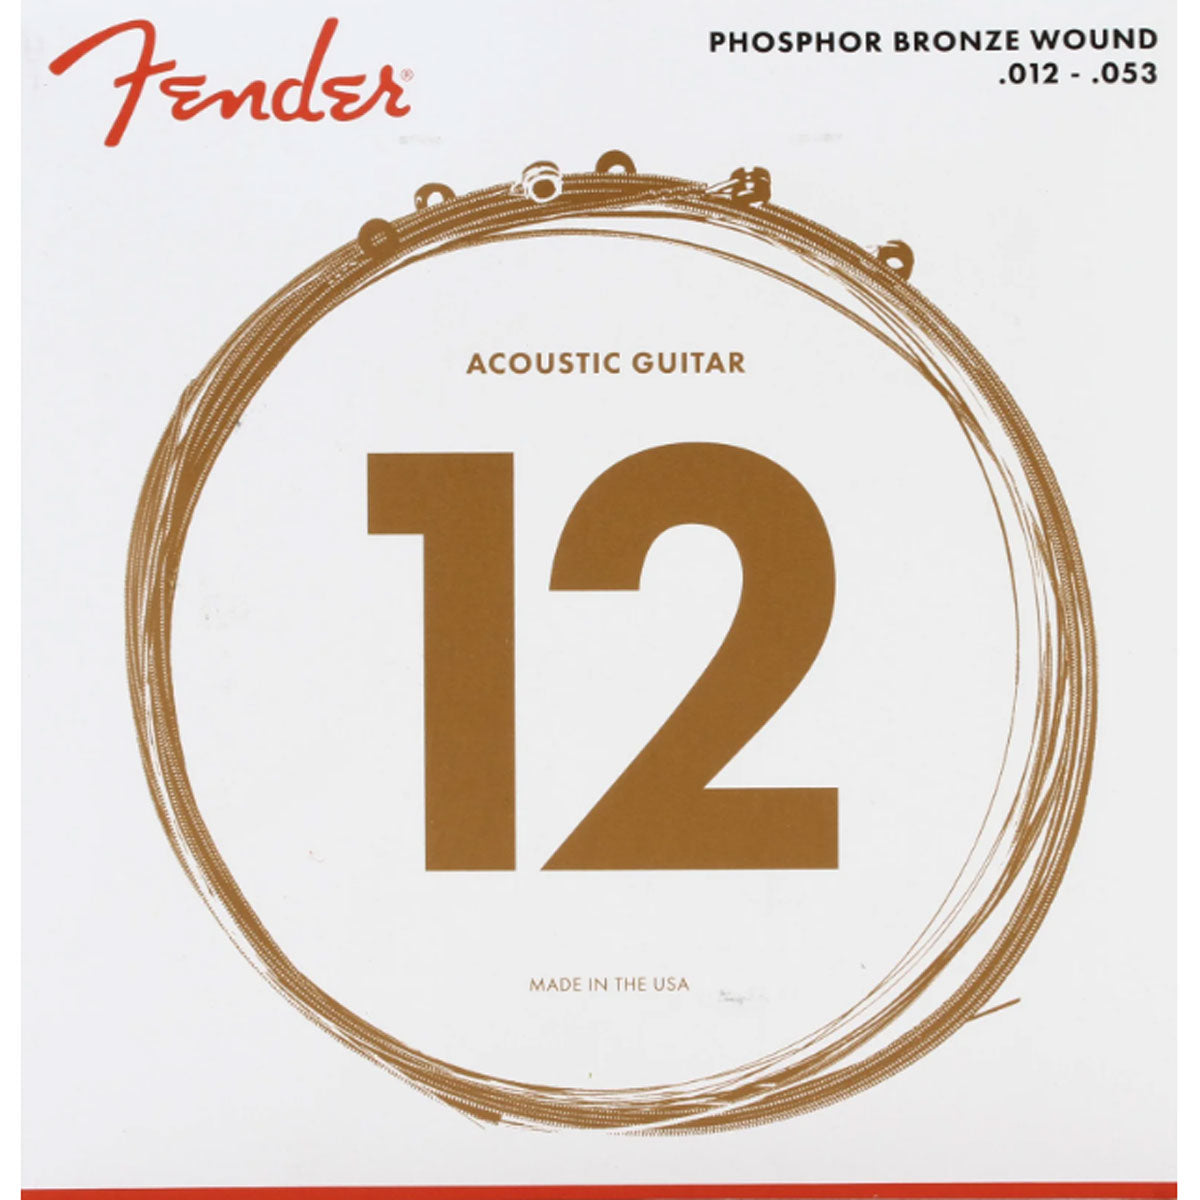 Fender Phosphor Bronze Acoustic Guitar Strings, Ball End, 60L .012-.053